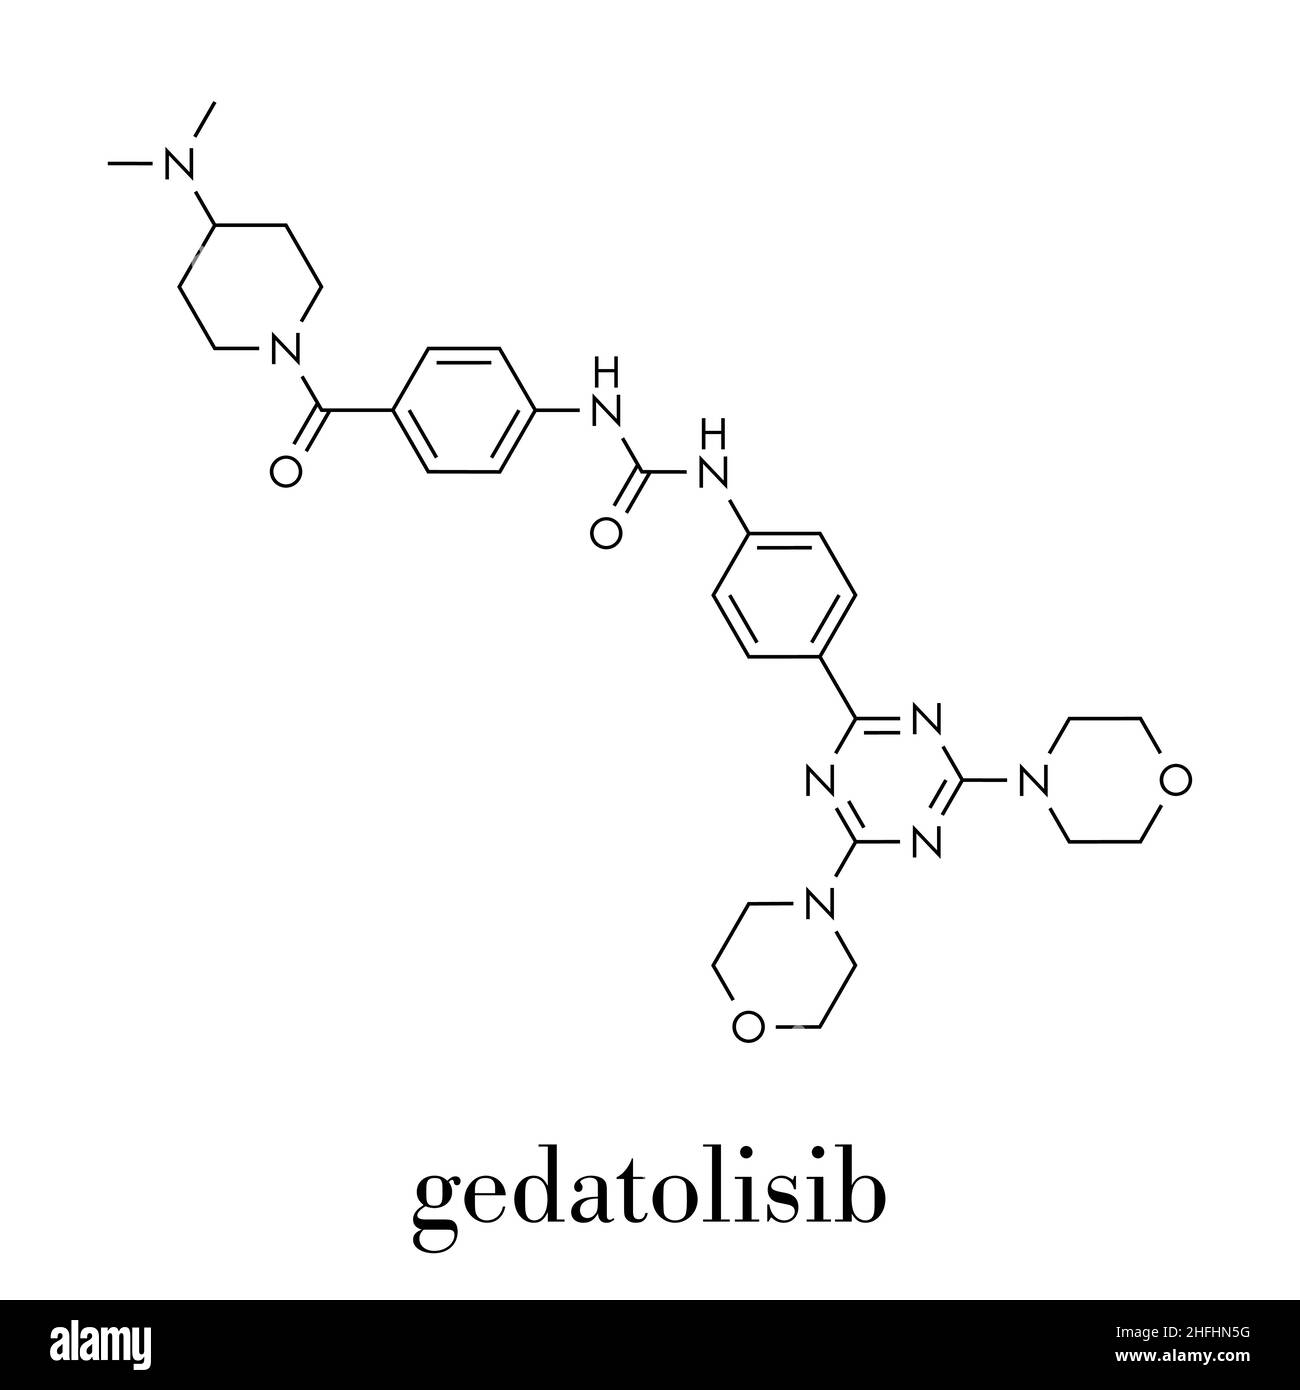 Gedatolisib cancer drug molecule. Skeletal formula. Stock Vector